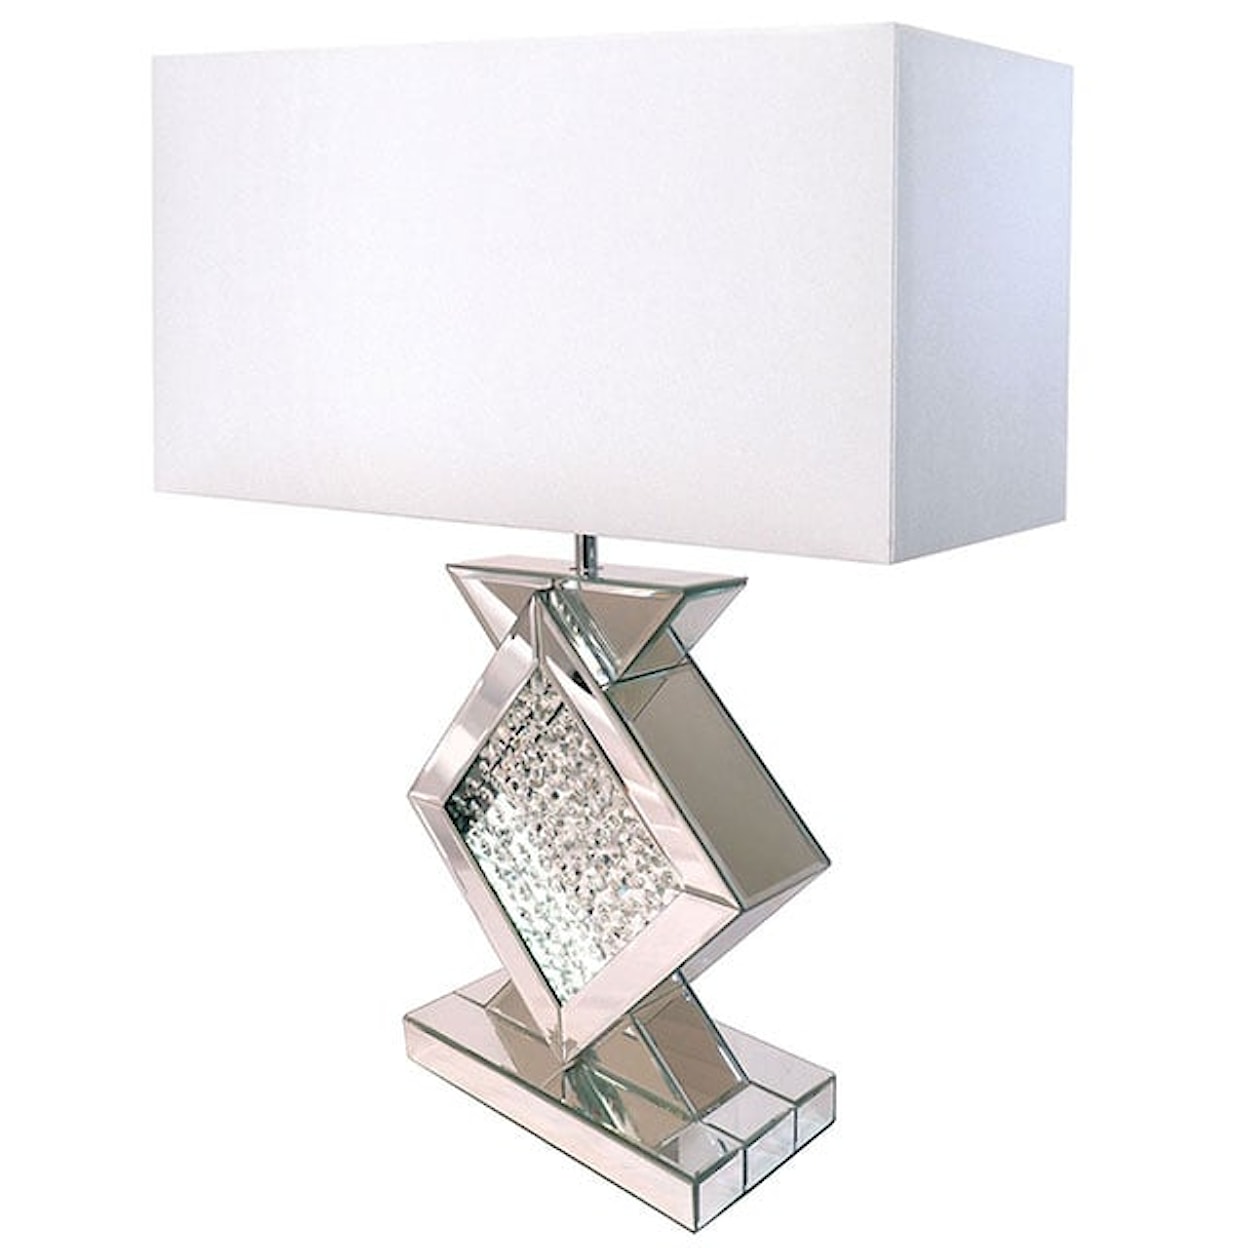 Furniture of America Desma Lamp